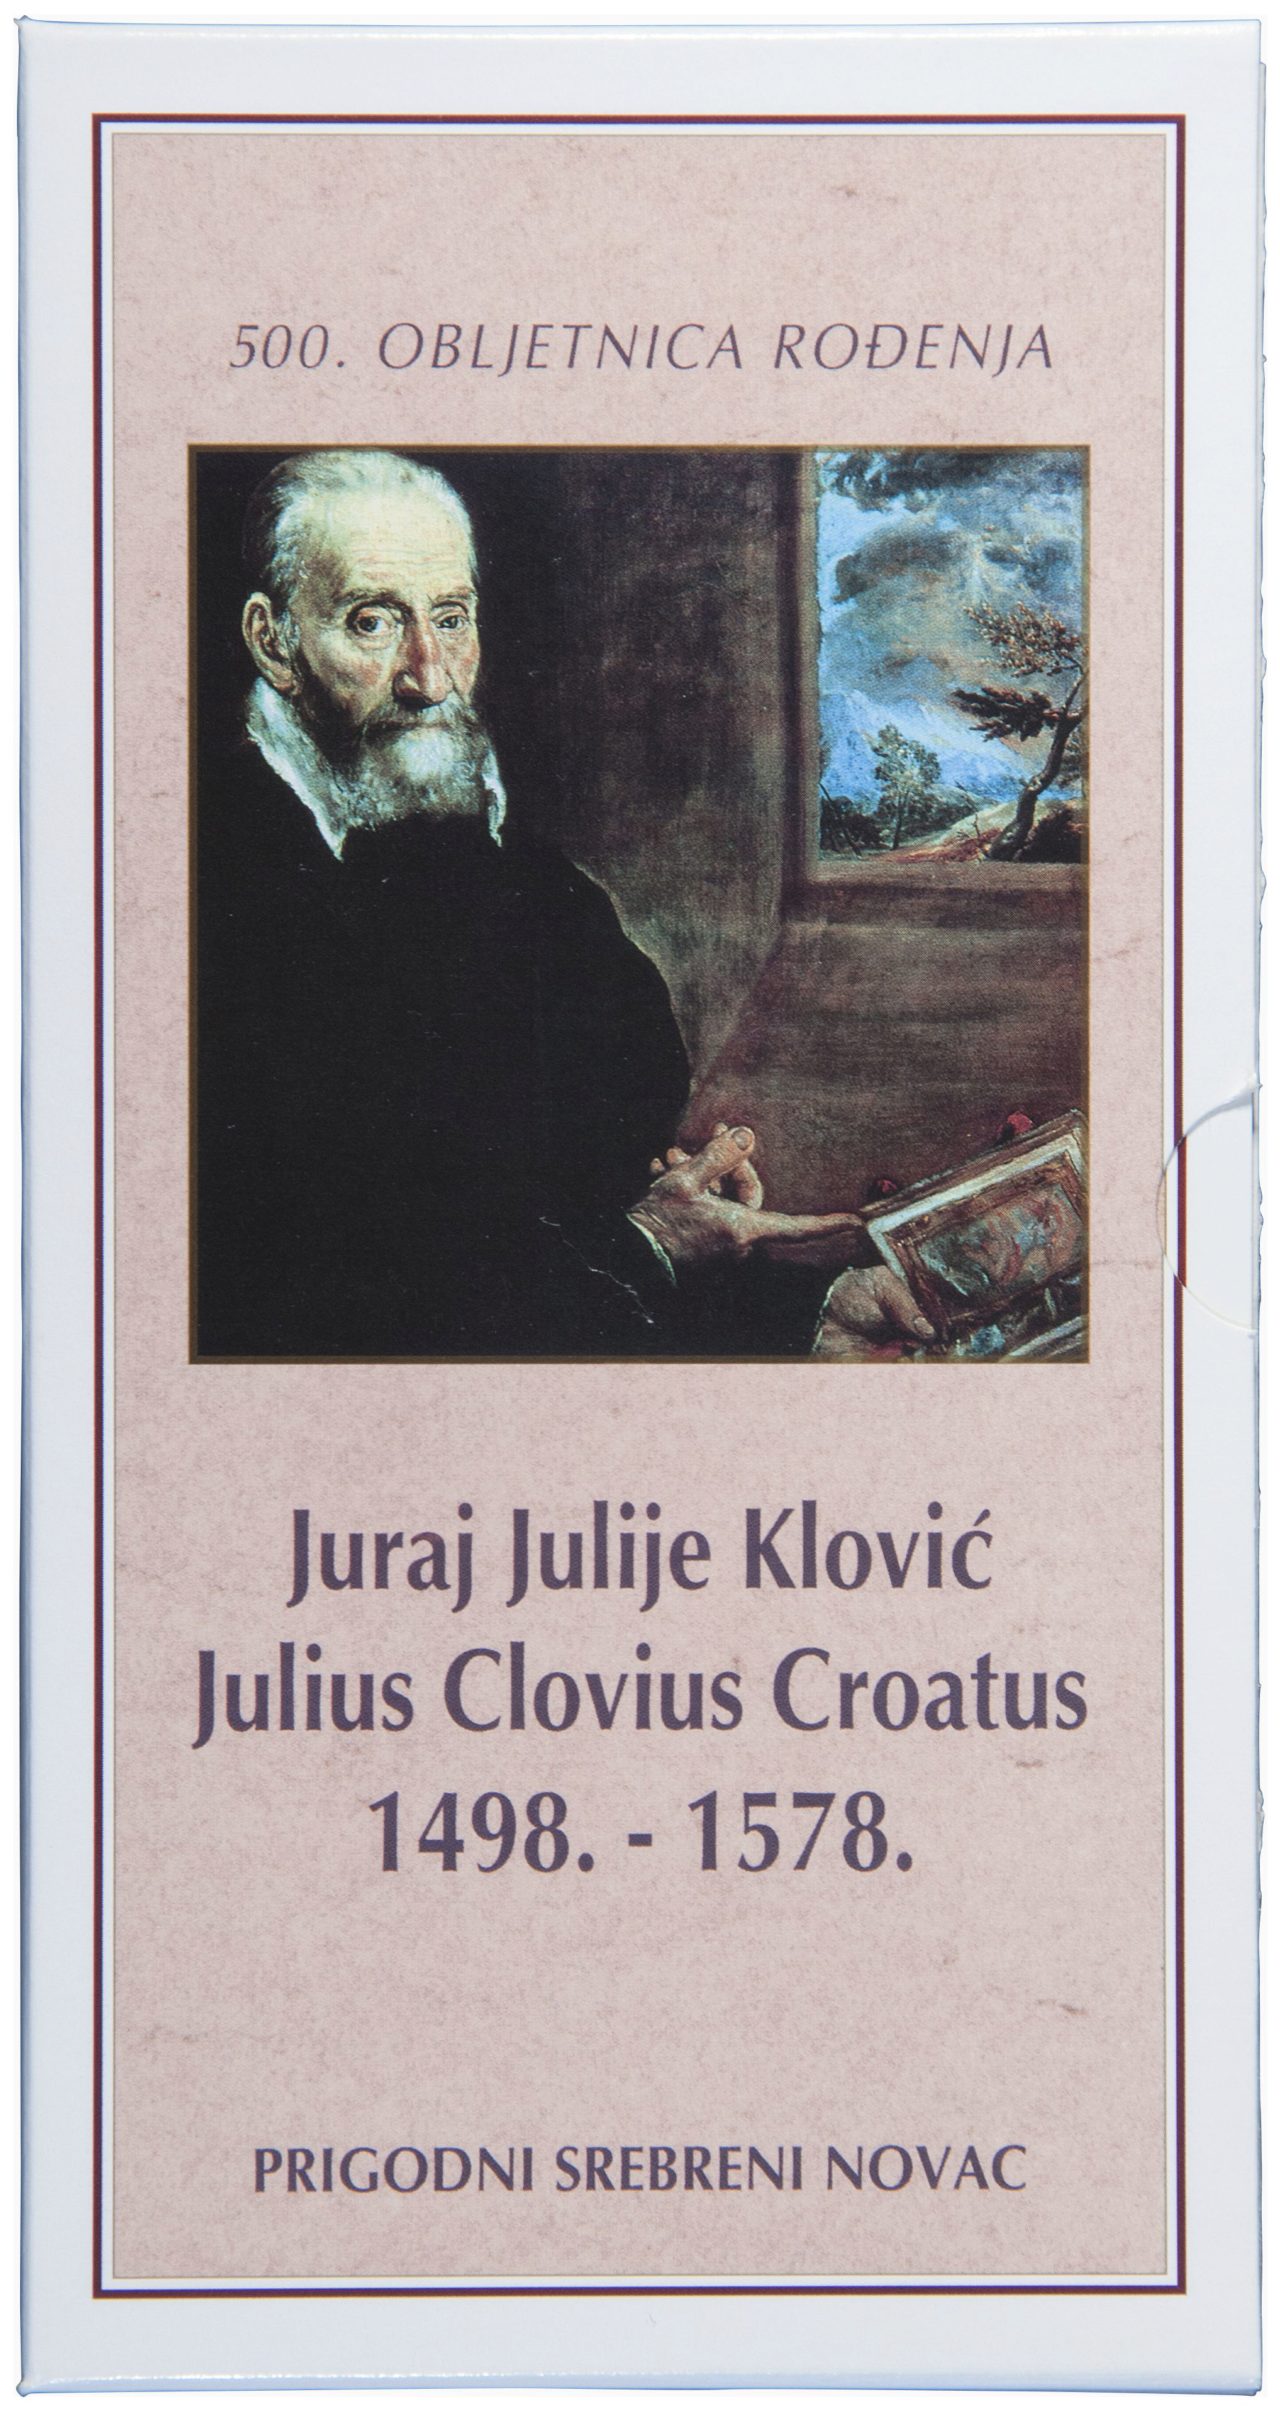 500th Anniversary of the Birth of Juraj Julije Klović